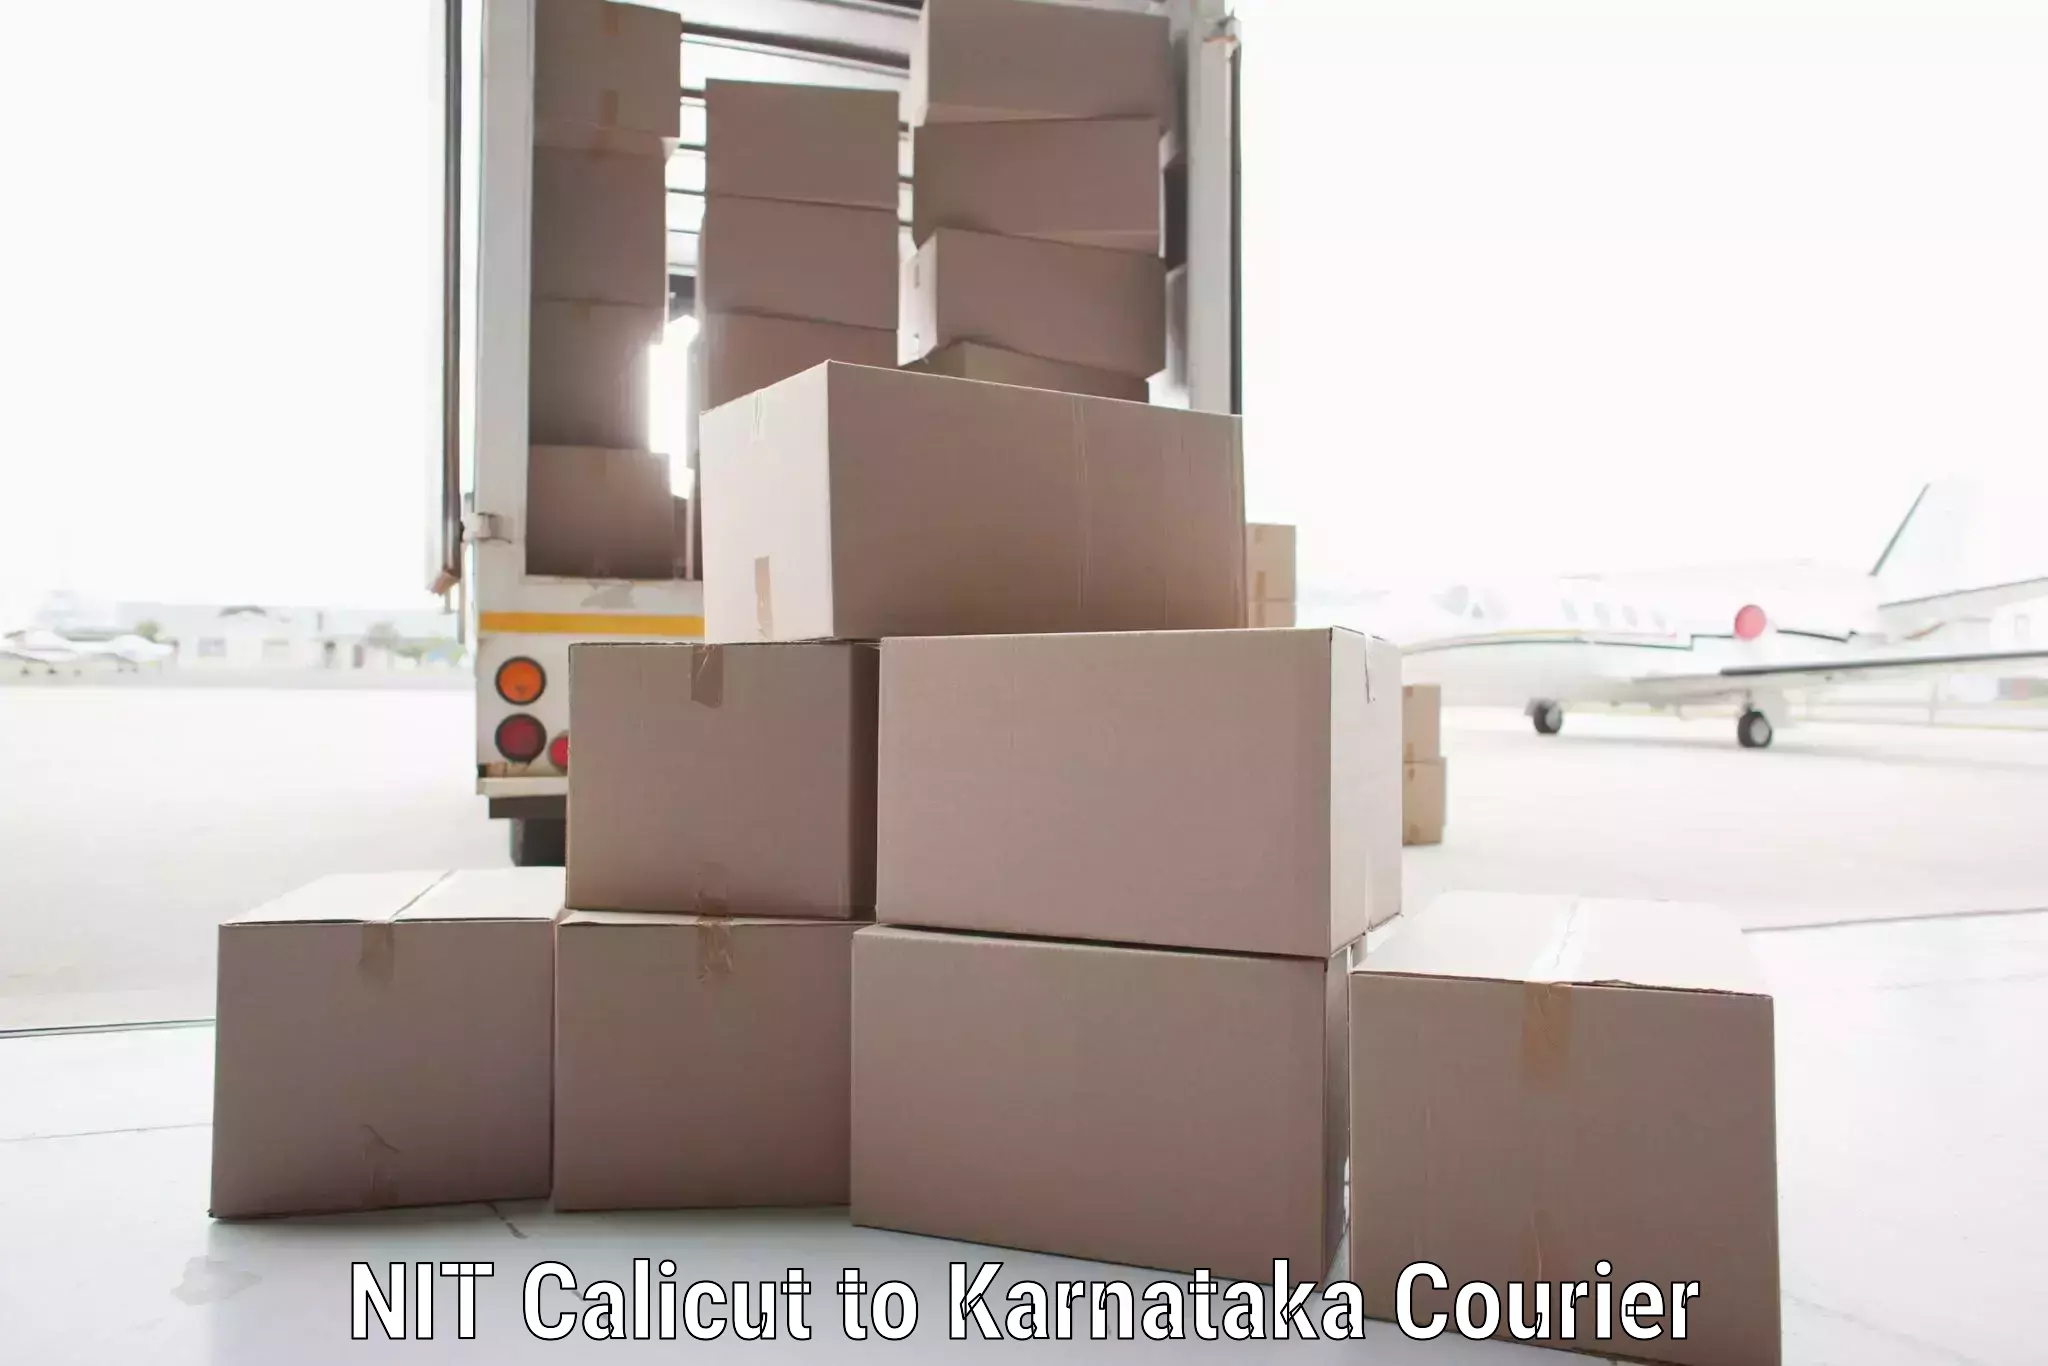 International parcel service NIT Calicut to Bailhongal